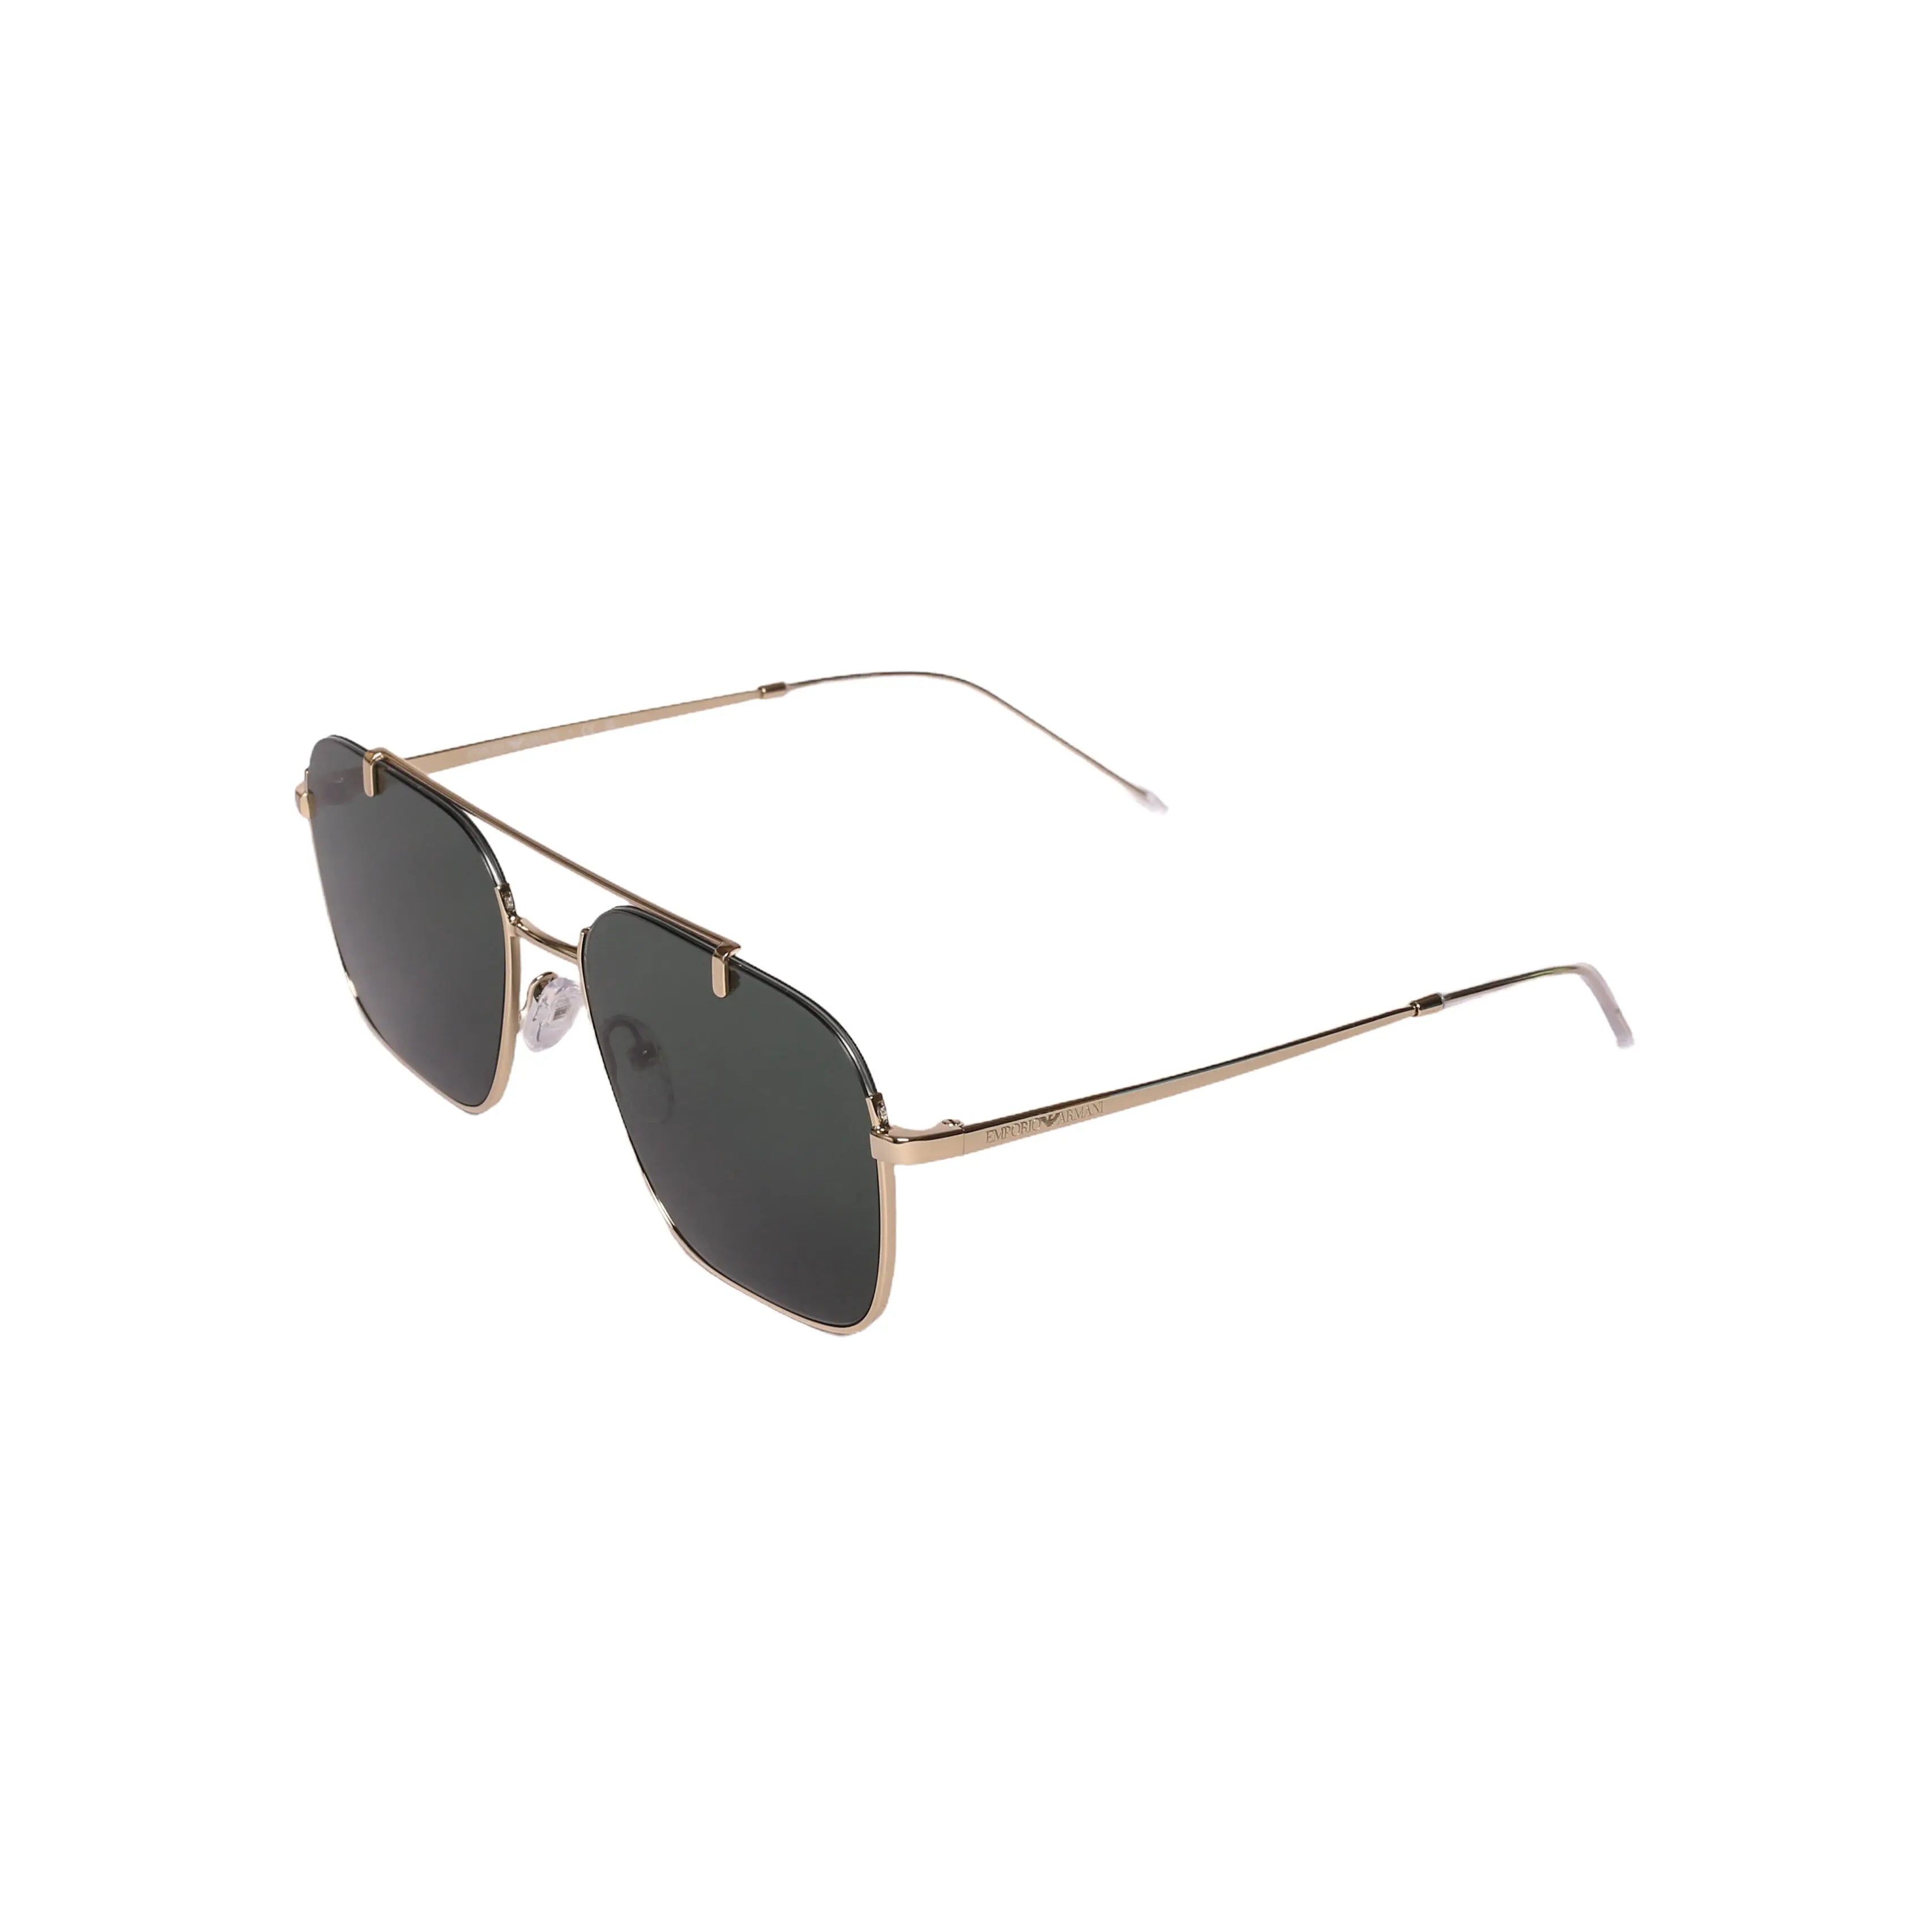 Emporio Armani-EA 2150-57-3013 Sunglasses - Premium Sunglasses from Emporio Armani - Just Rs. 15490! Shop now at Laxmi Opticians